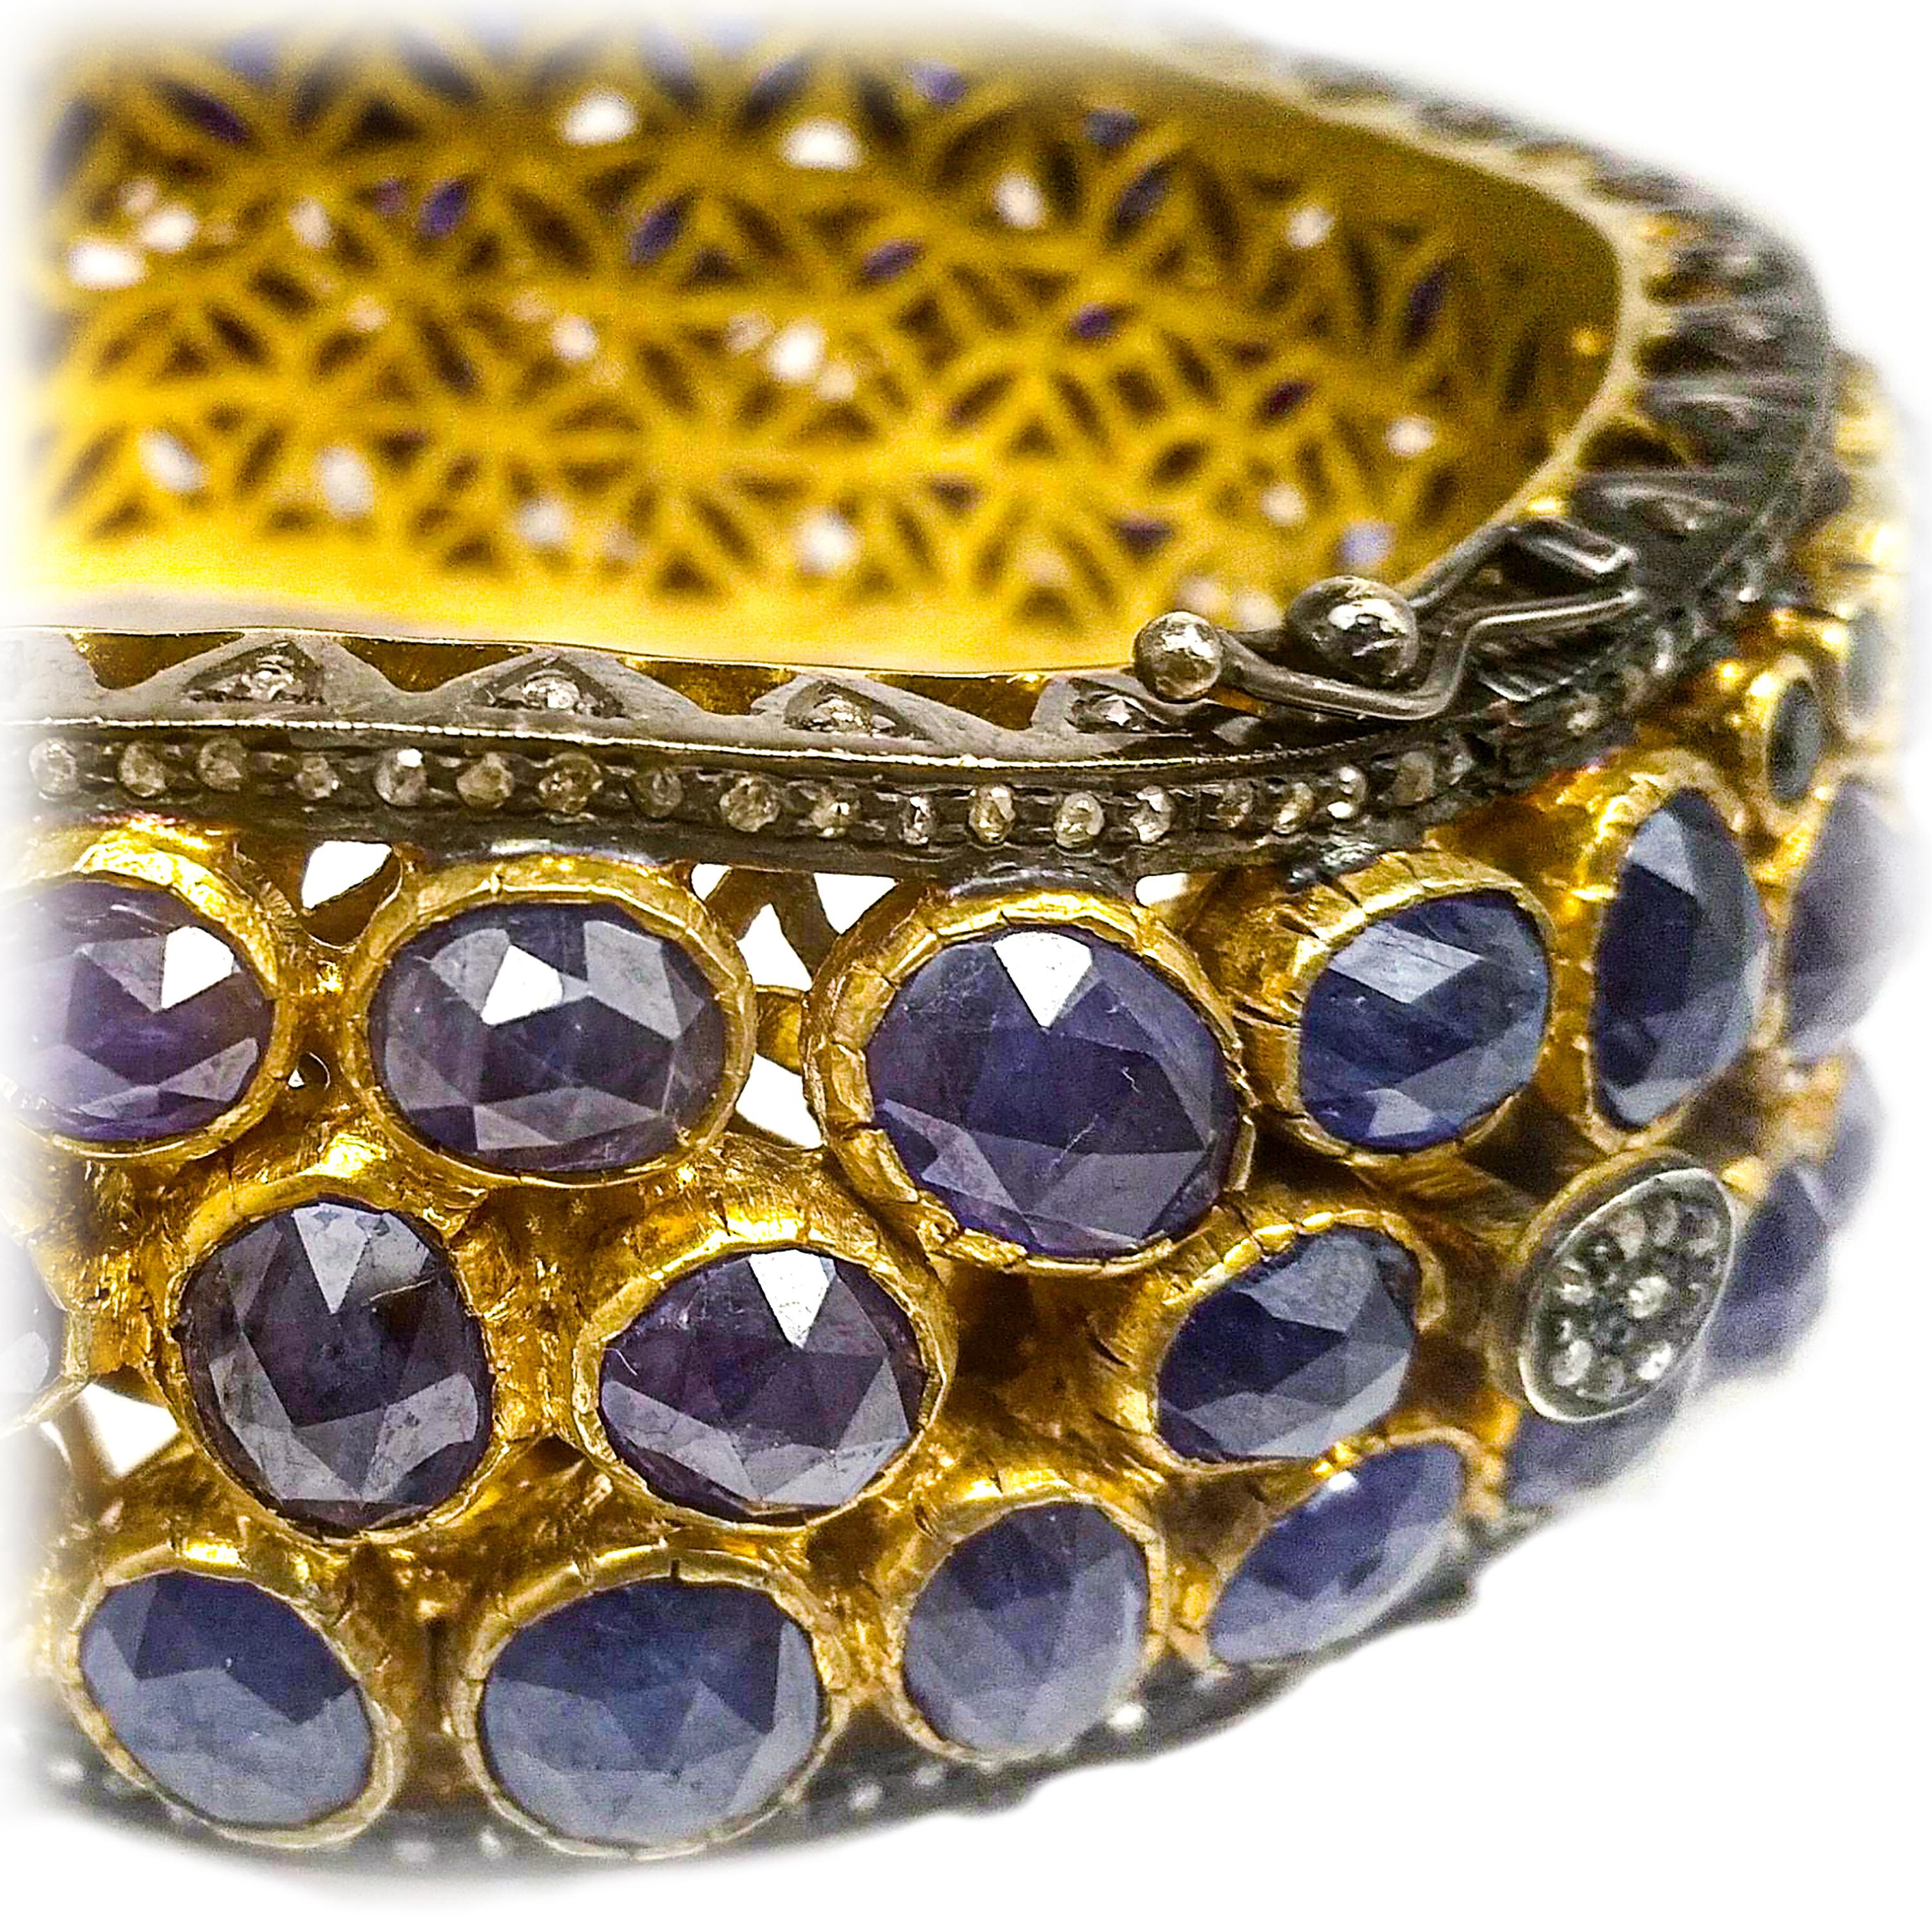 Oval Cut Maharaja 70 Carat Fancy Cut Sapphire Bangle Bracelet